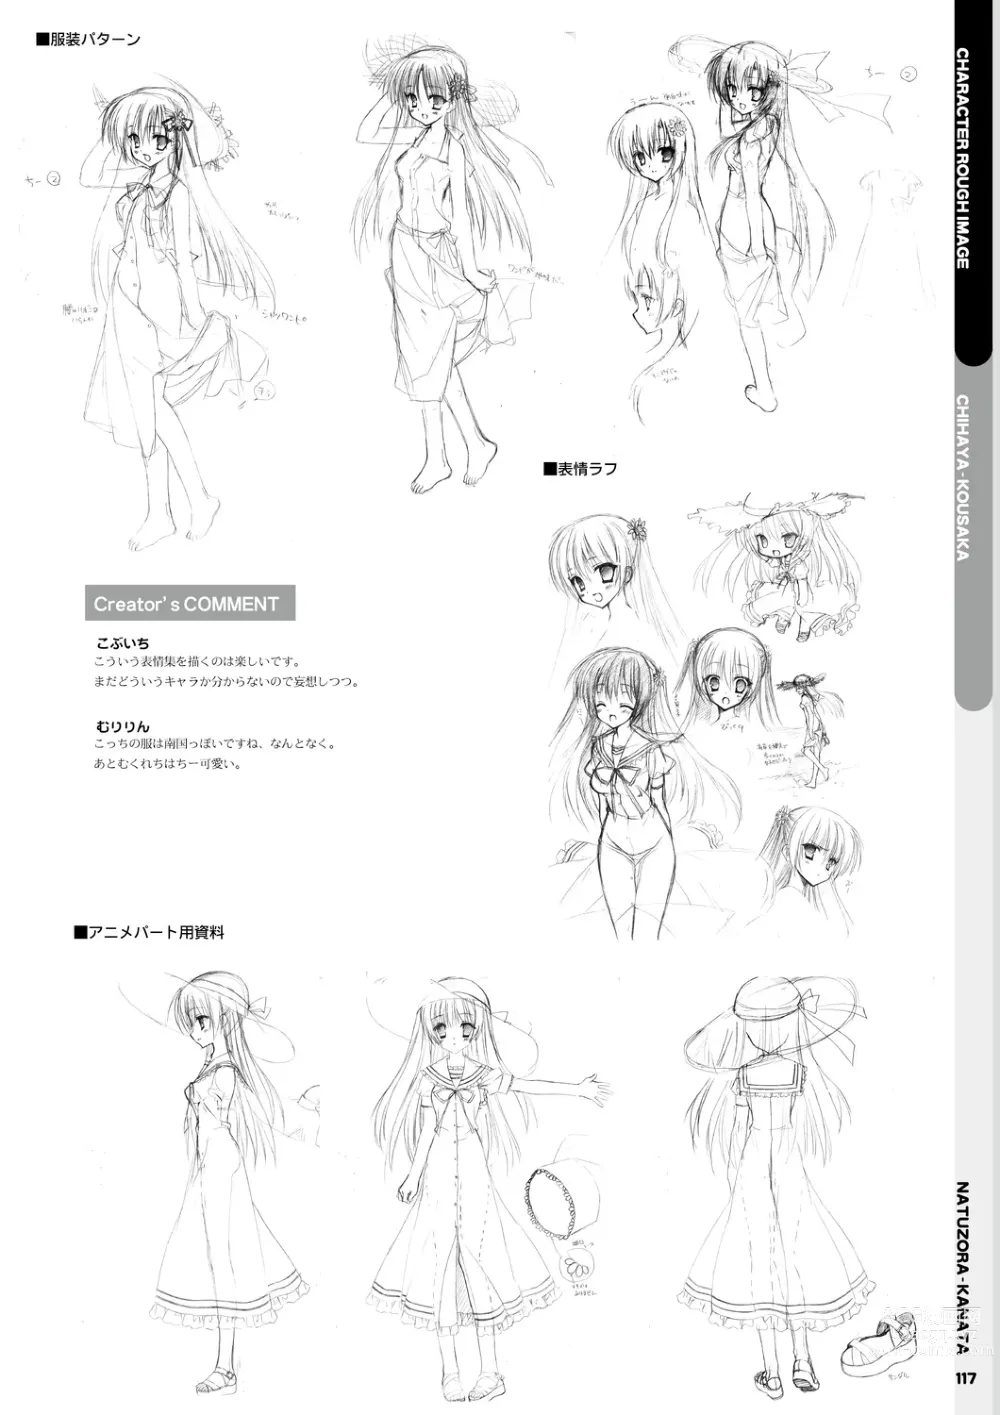 Page 119 of manga Natsuzora Kanata Official Visual Fan Book